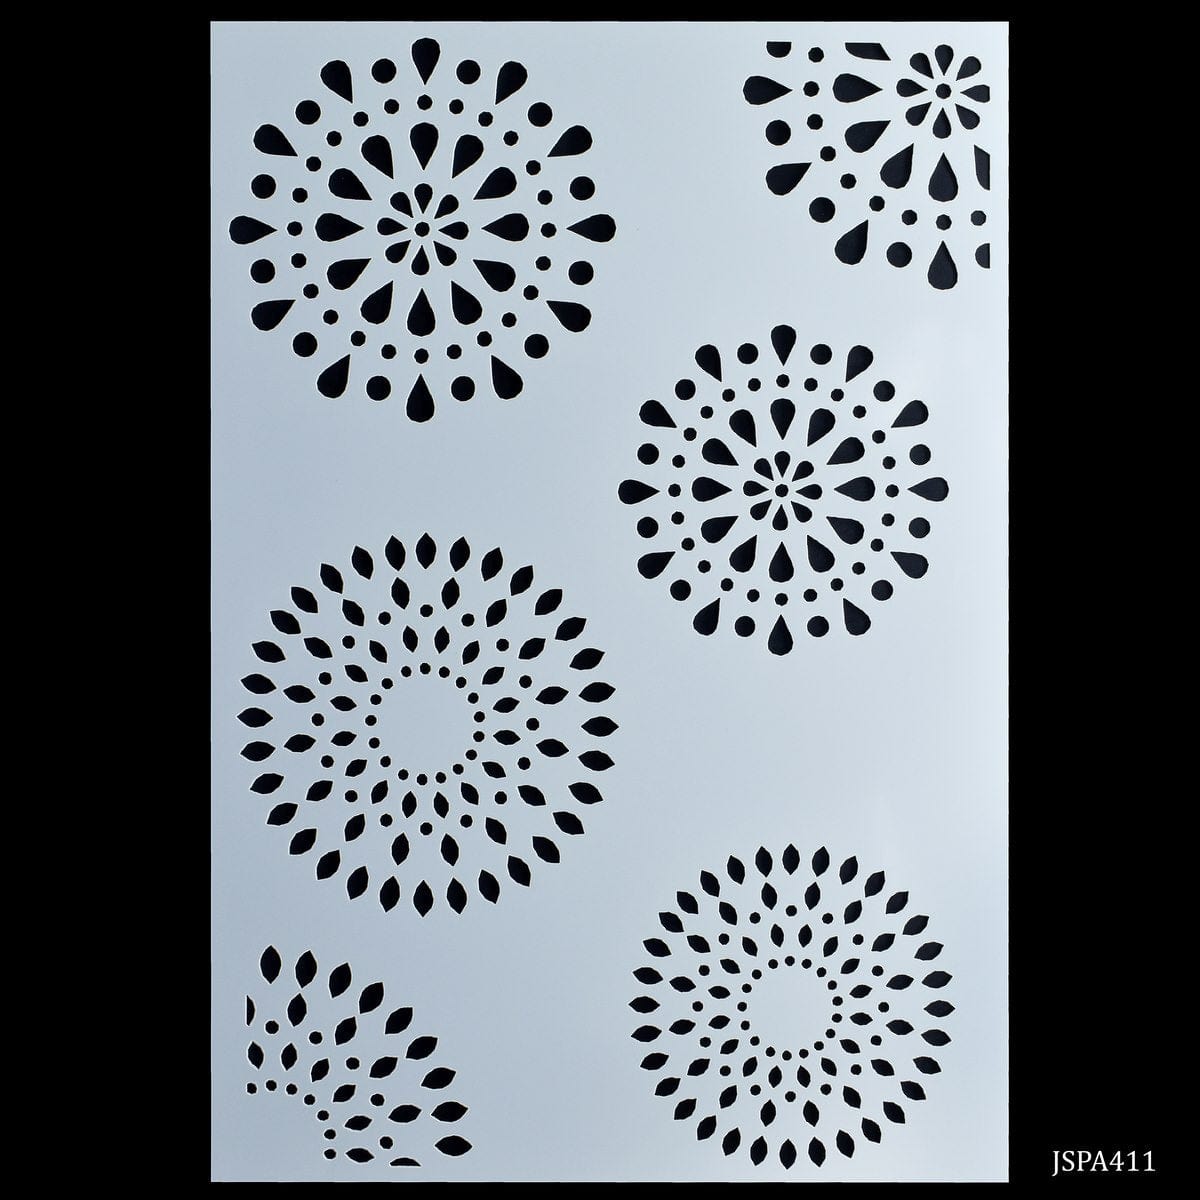 jags-mumbai Stencil Stencil Plastic A4 Round Mandala Design